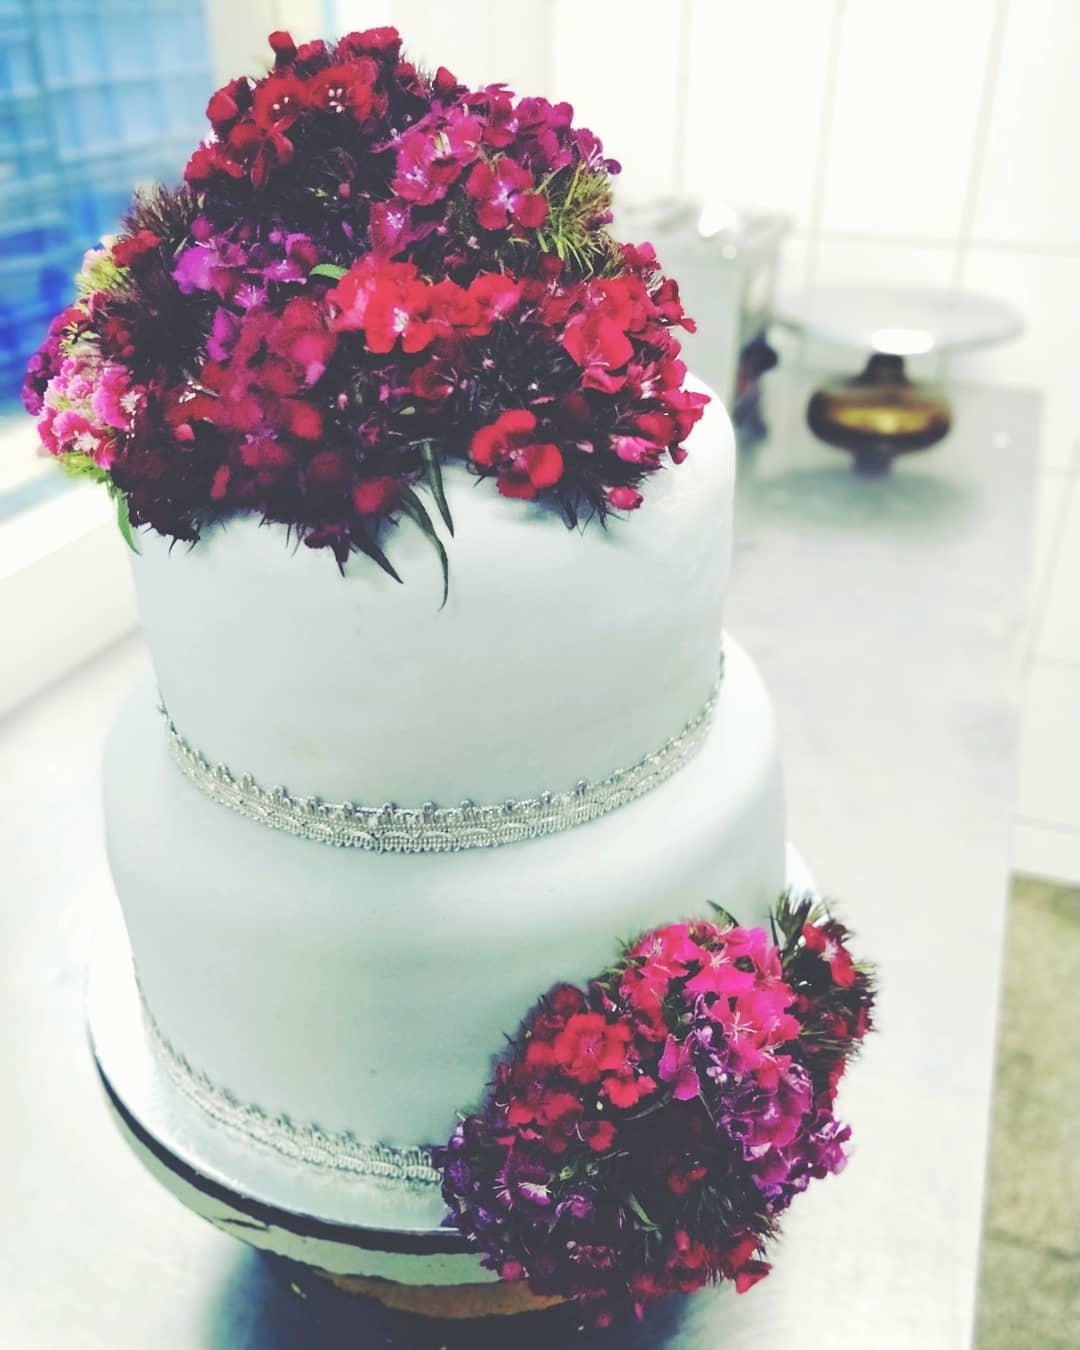 Big Cake House - A dream is a wish your heart makes. : : #bigcakehouse  #wedding #birthday #anniversary #baptism #holycommunion #cake #celebration  | Facebook